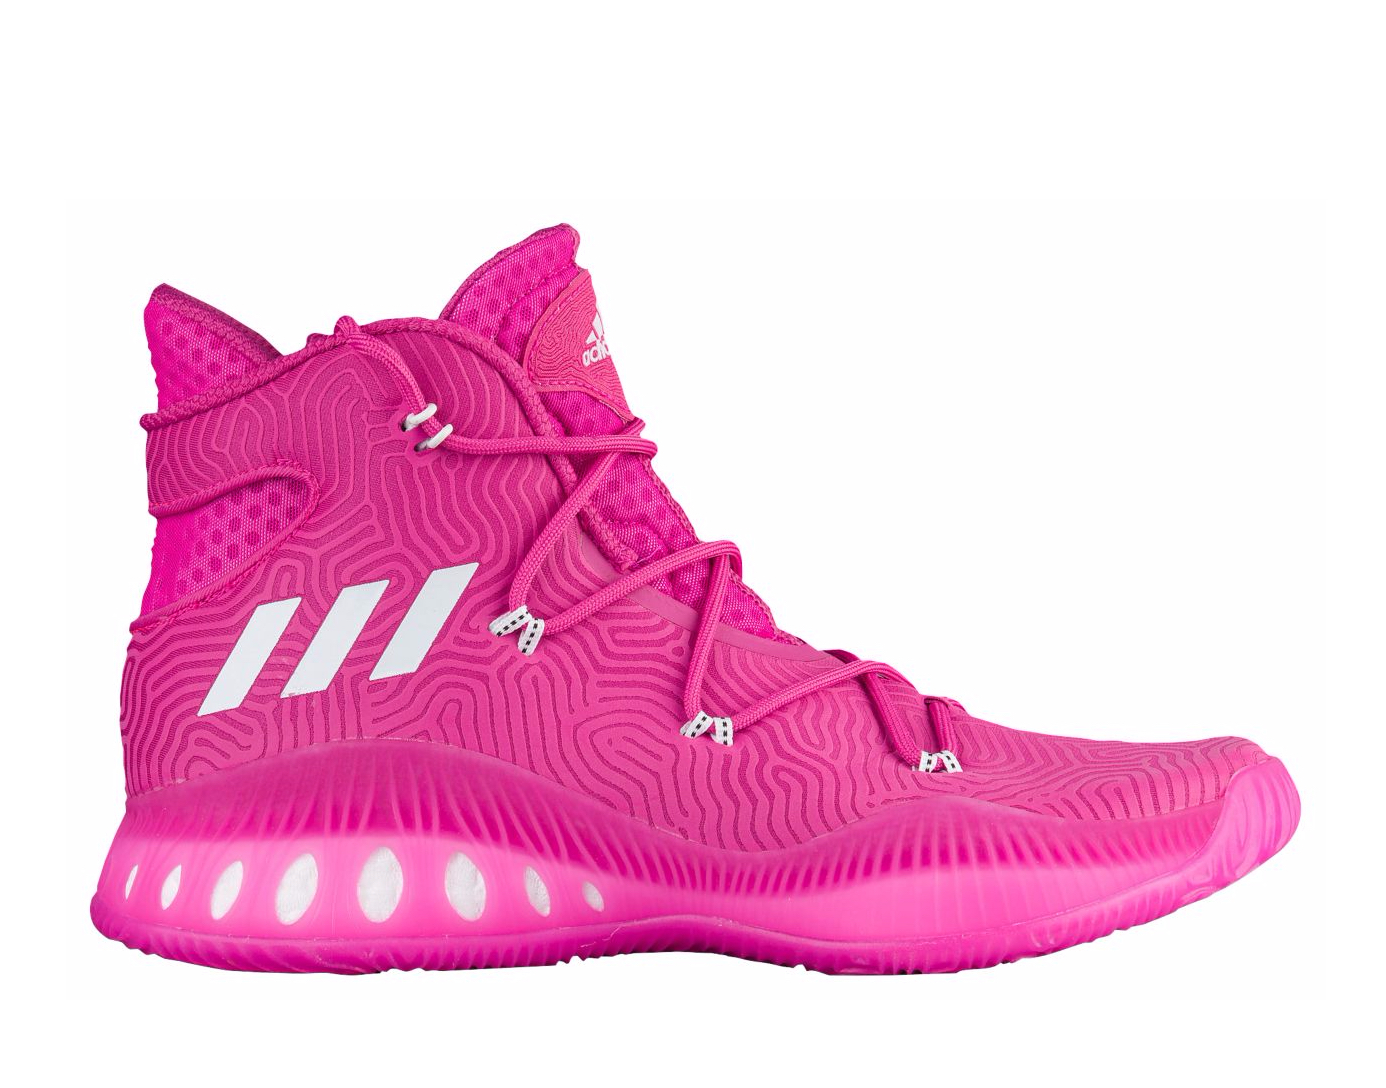 pink adidas crazy explosive low